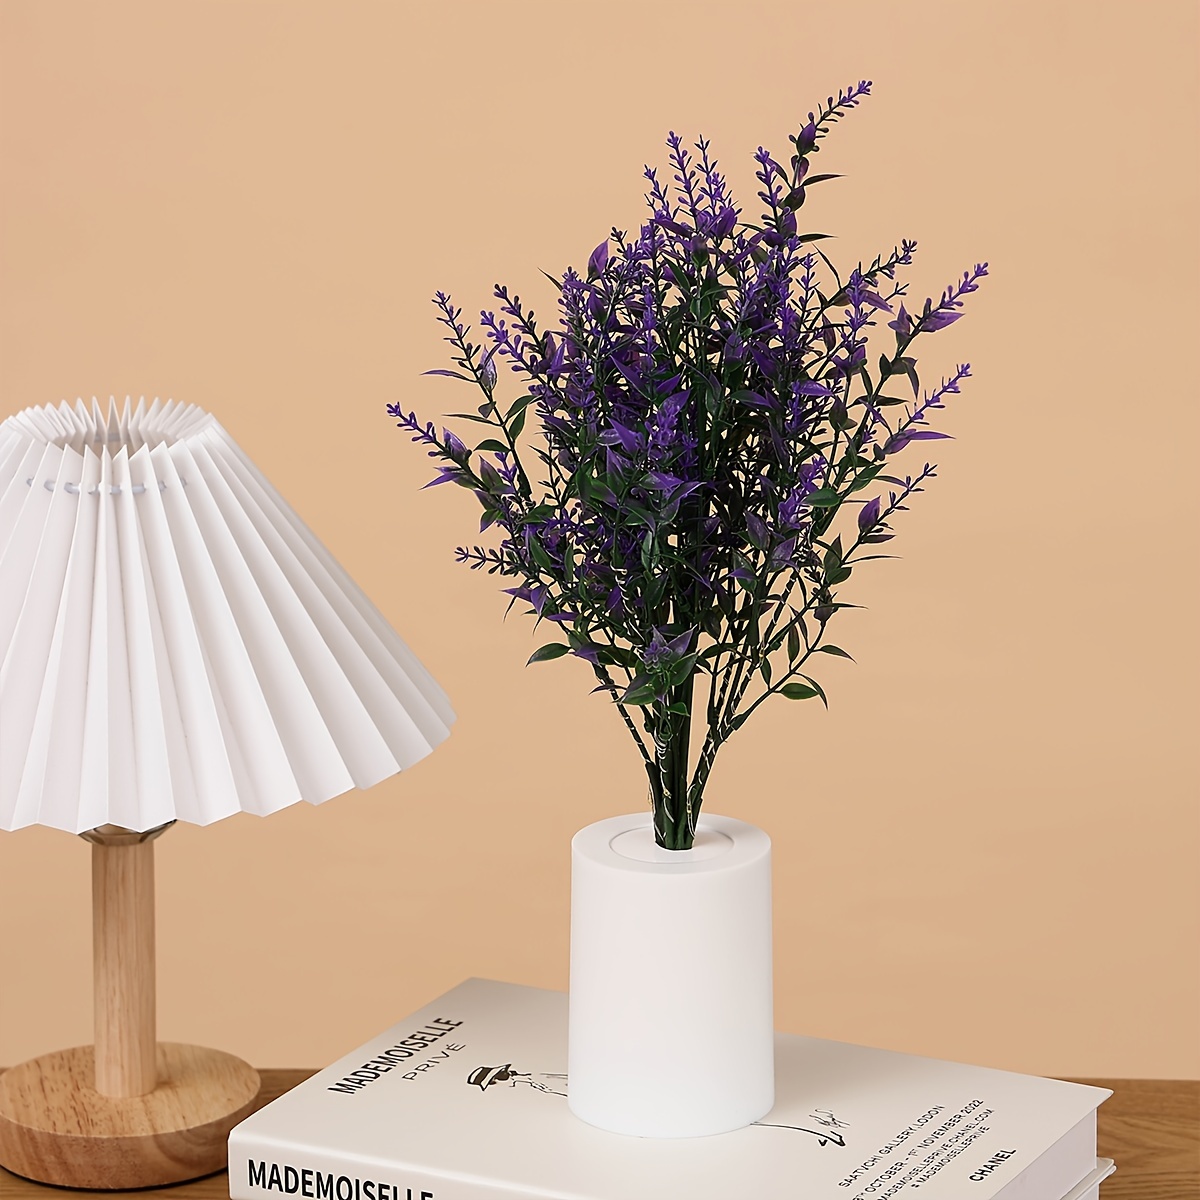 Vikakiooze Night Light Mother's Day Gift - Birthday Gift/Holiday Gift-Small Wildflower Lamp Lights , Desk Lamp LED Simulation,Night Light with Vase